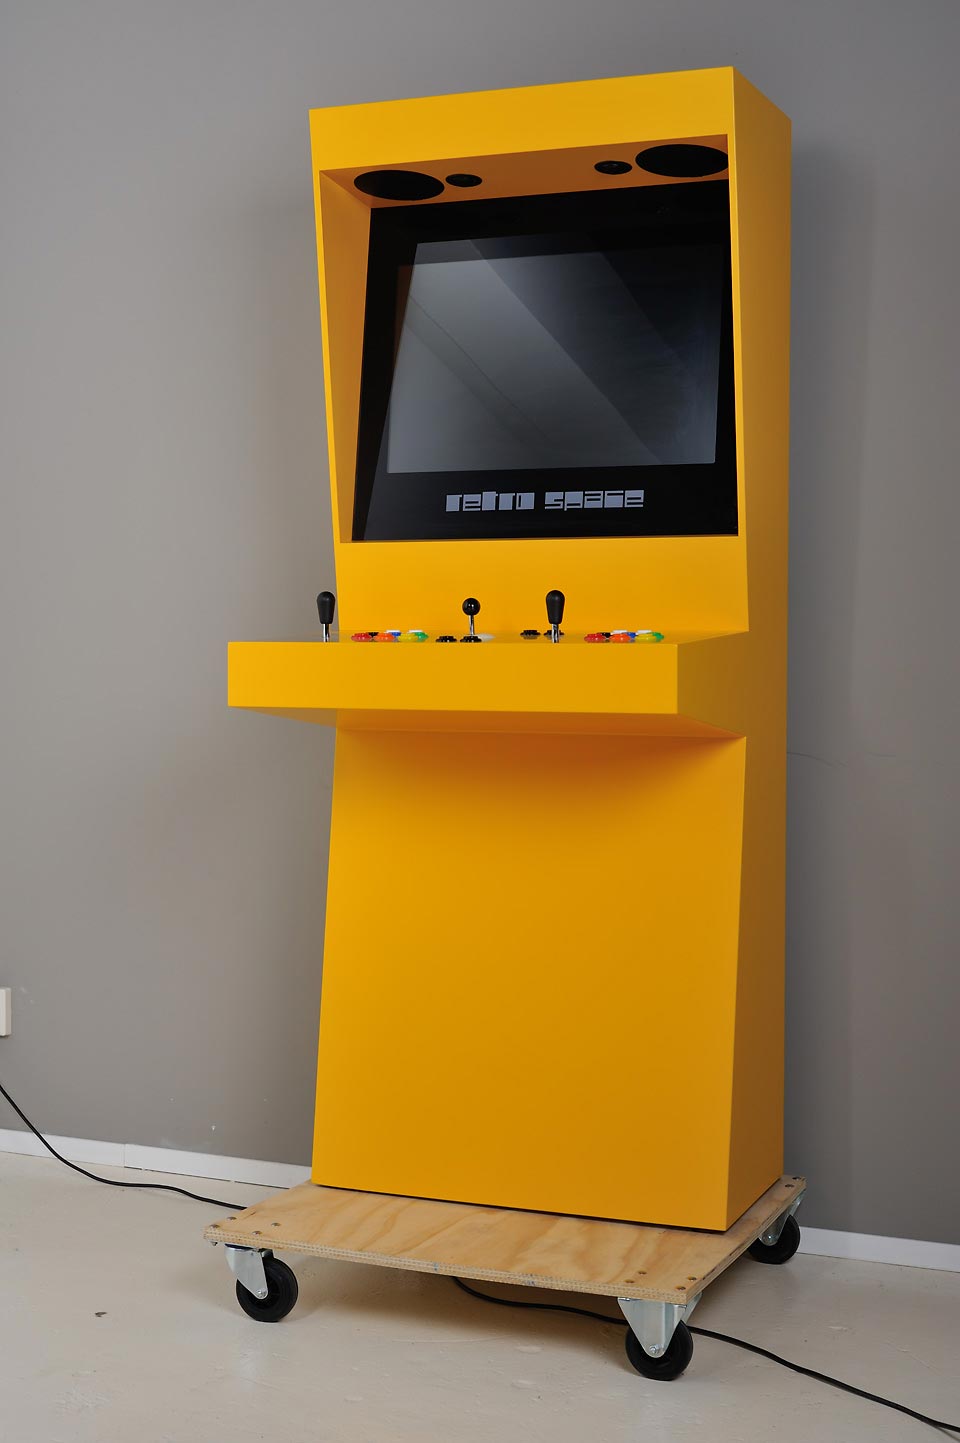 Retro Space full arcade cabinet yellow